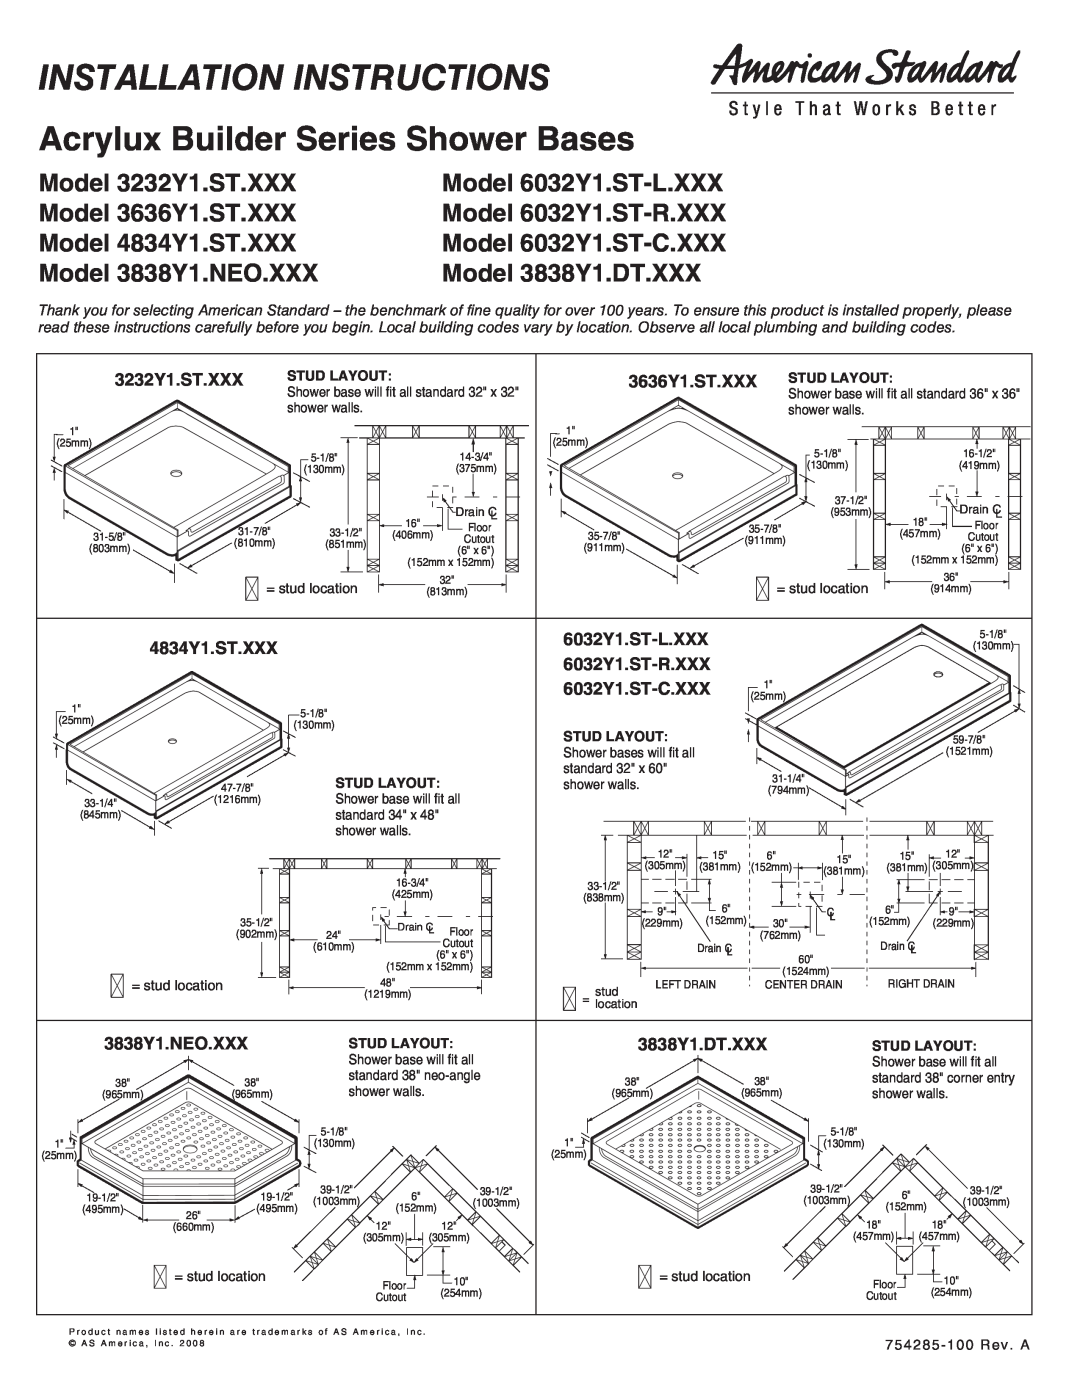 American Standard 3838Y1.DT.XXX installation instructions Installation Instructions, Acrylux Builder Series Shower Bases 